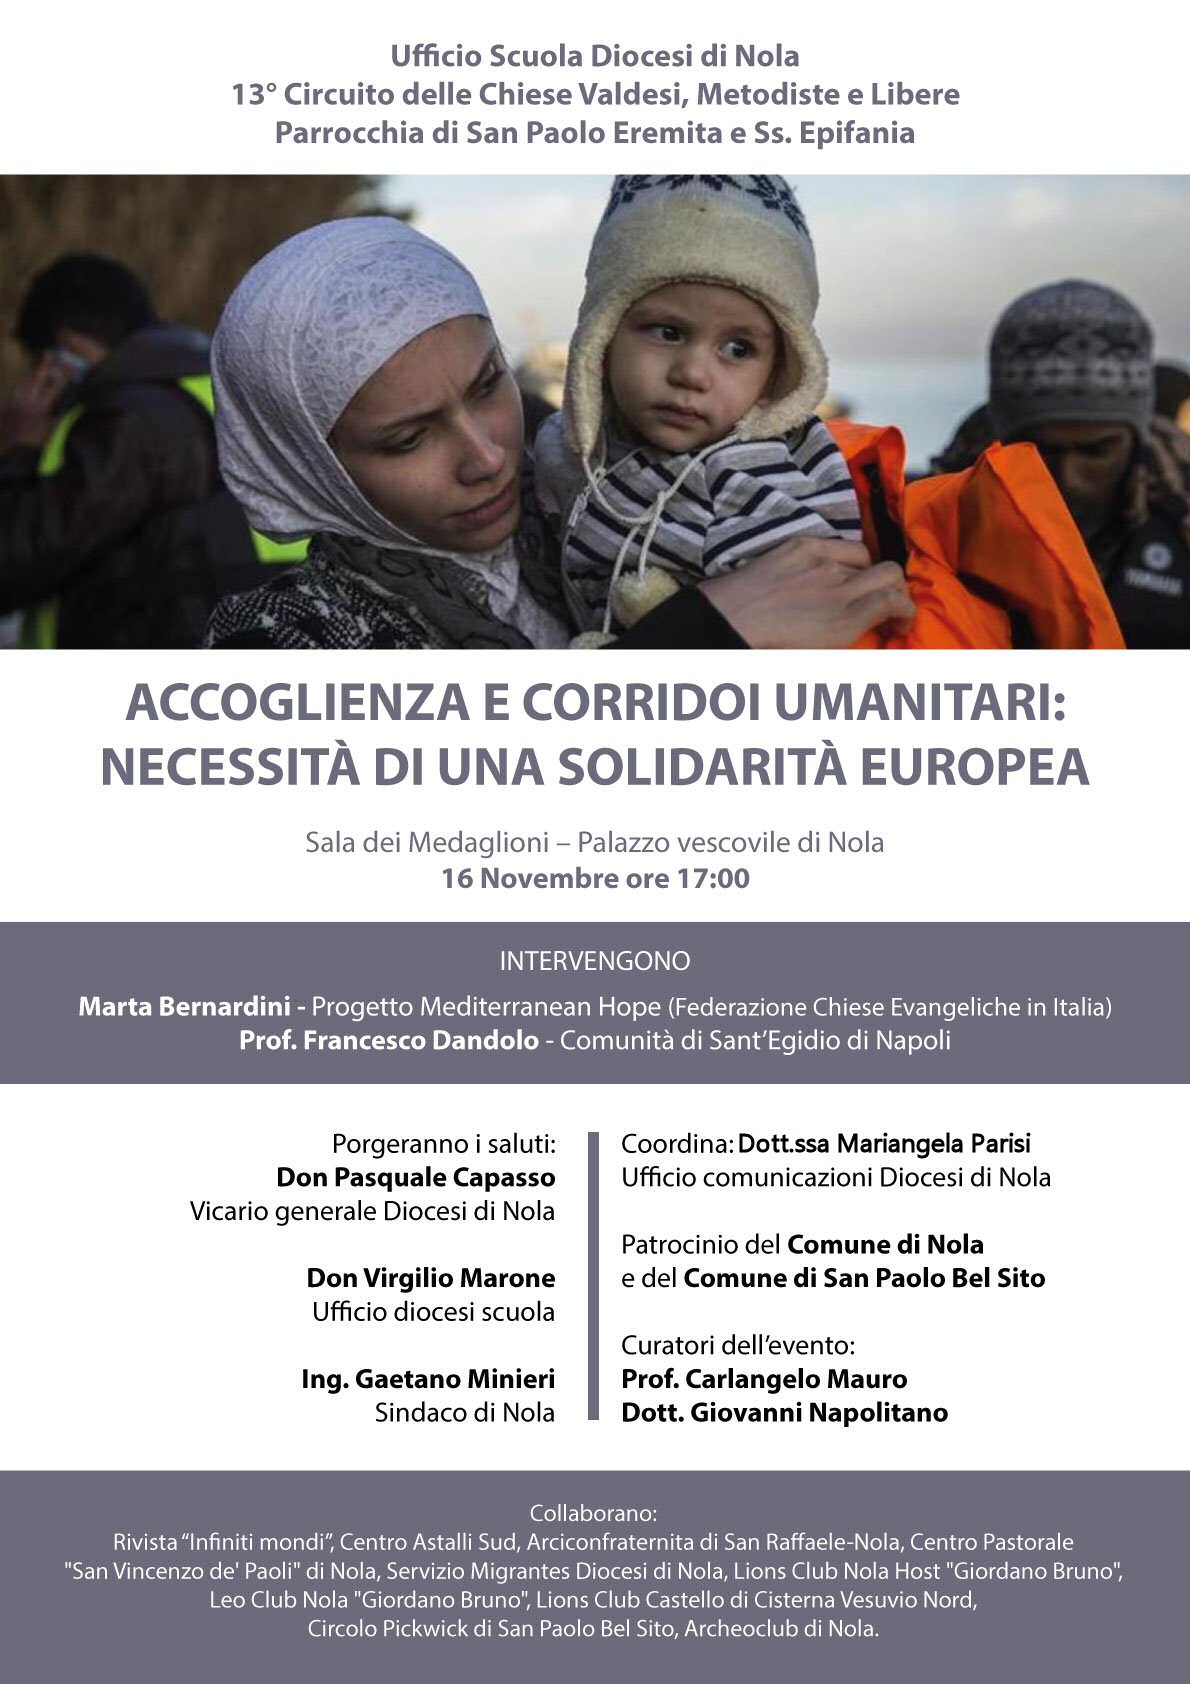 https://www.zerottounonews.it/wp-content/uploads/2019/11/Locandina-Accoglienza-e-corridoi-umanitari.jpg